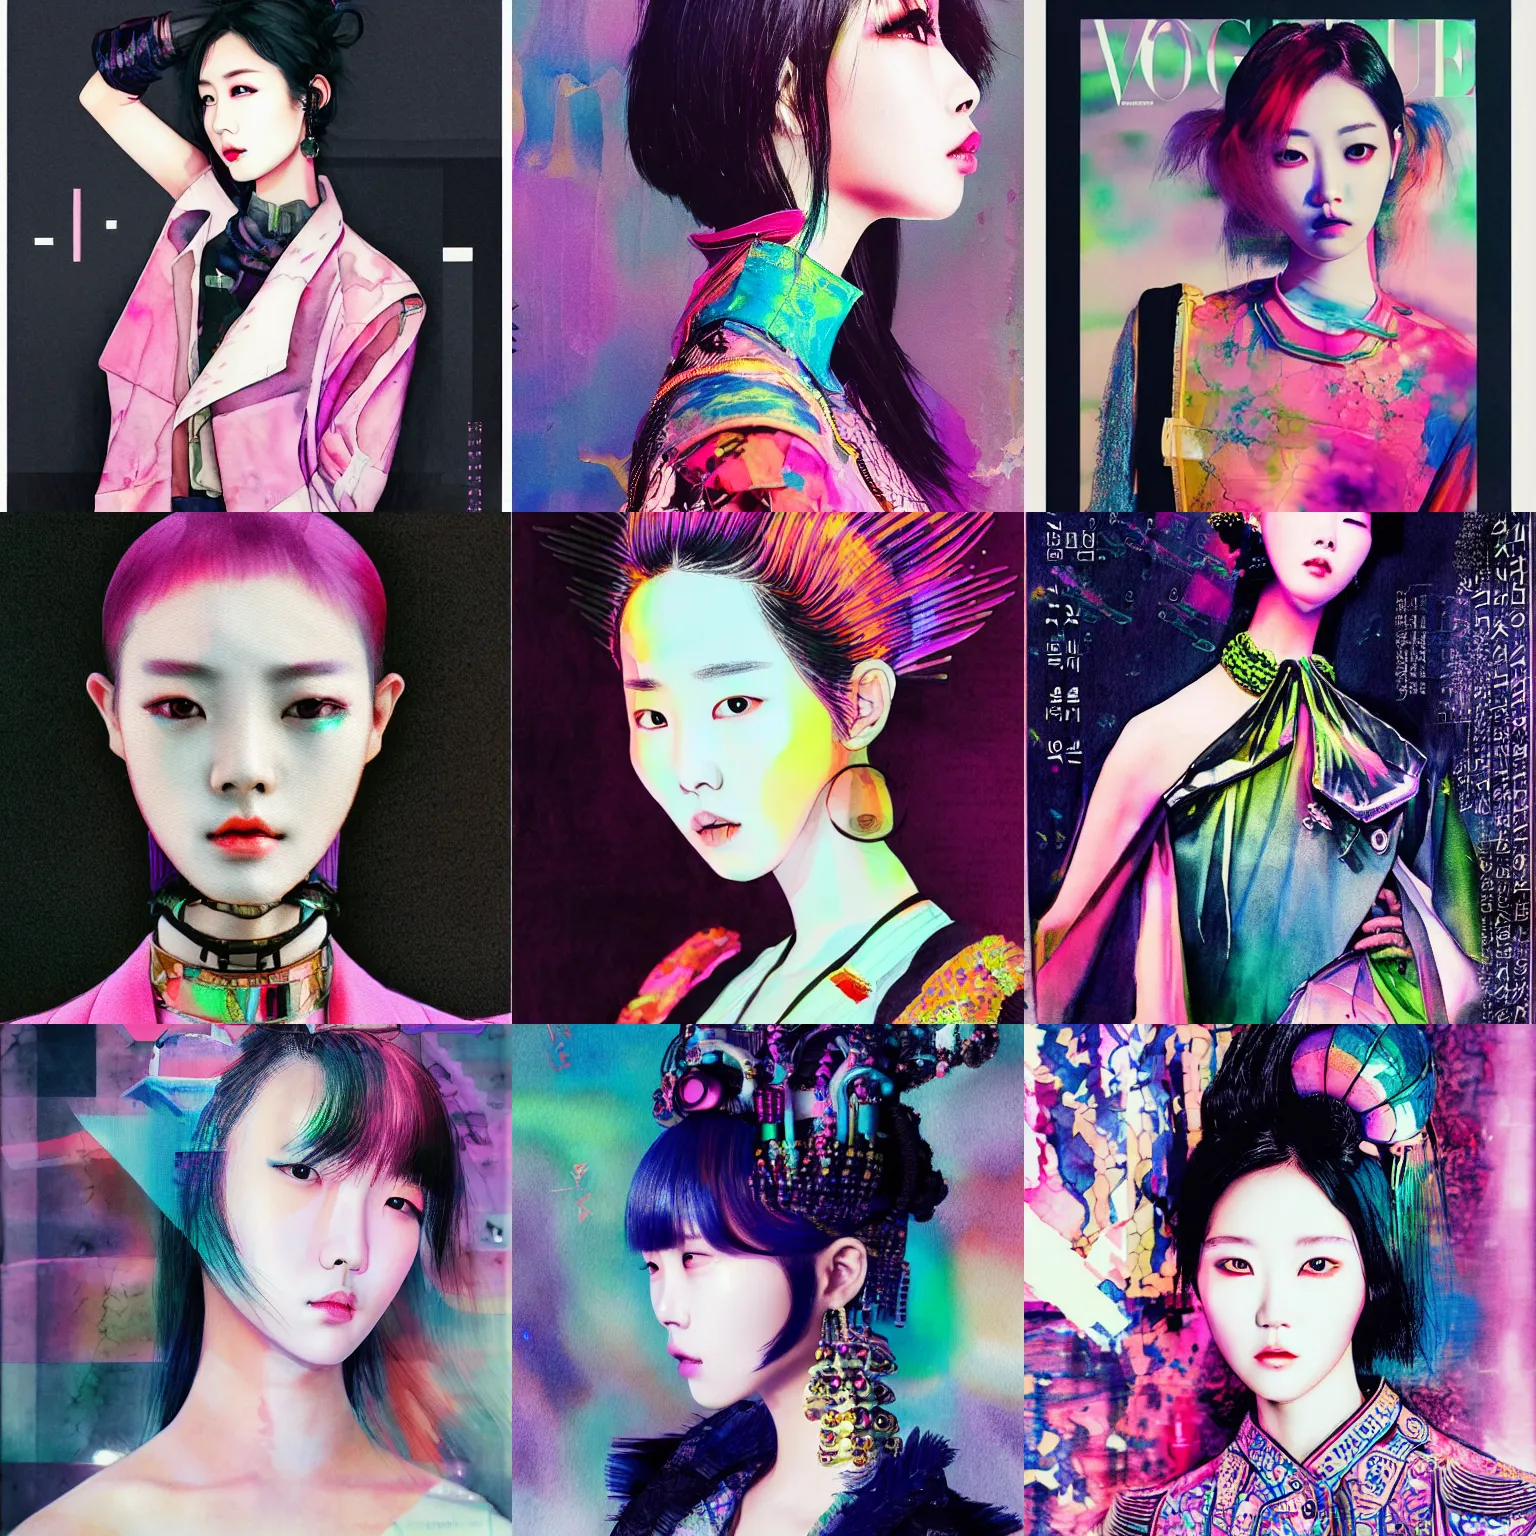 Prompt: korean women's fashion model, intricate watercolor cyberpunk vaporwave portrait by vogue magazine